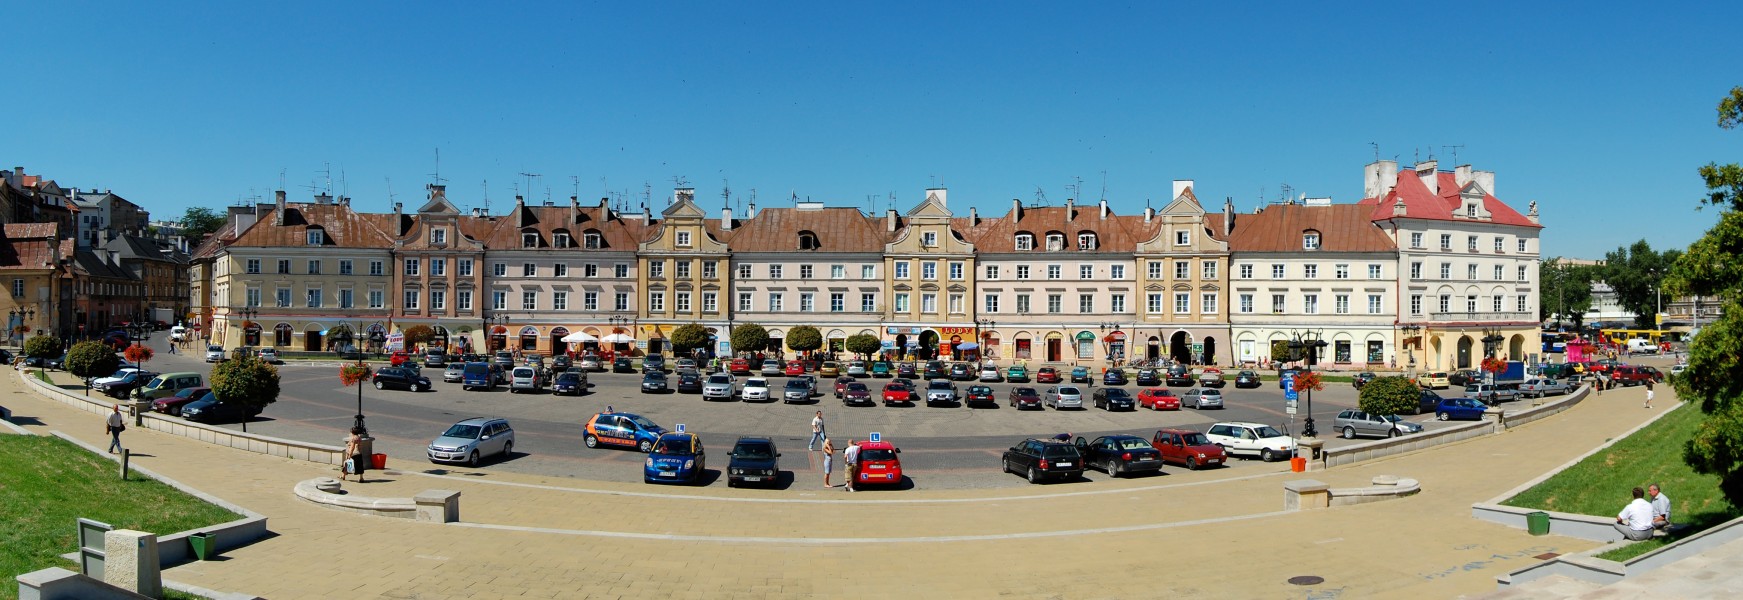 Lublin plac Zamkowy